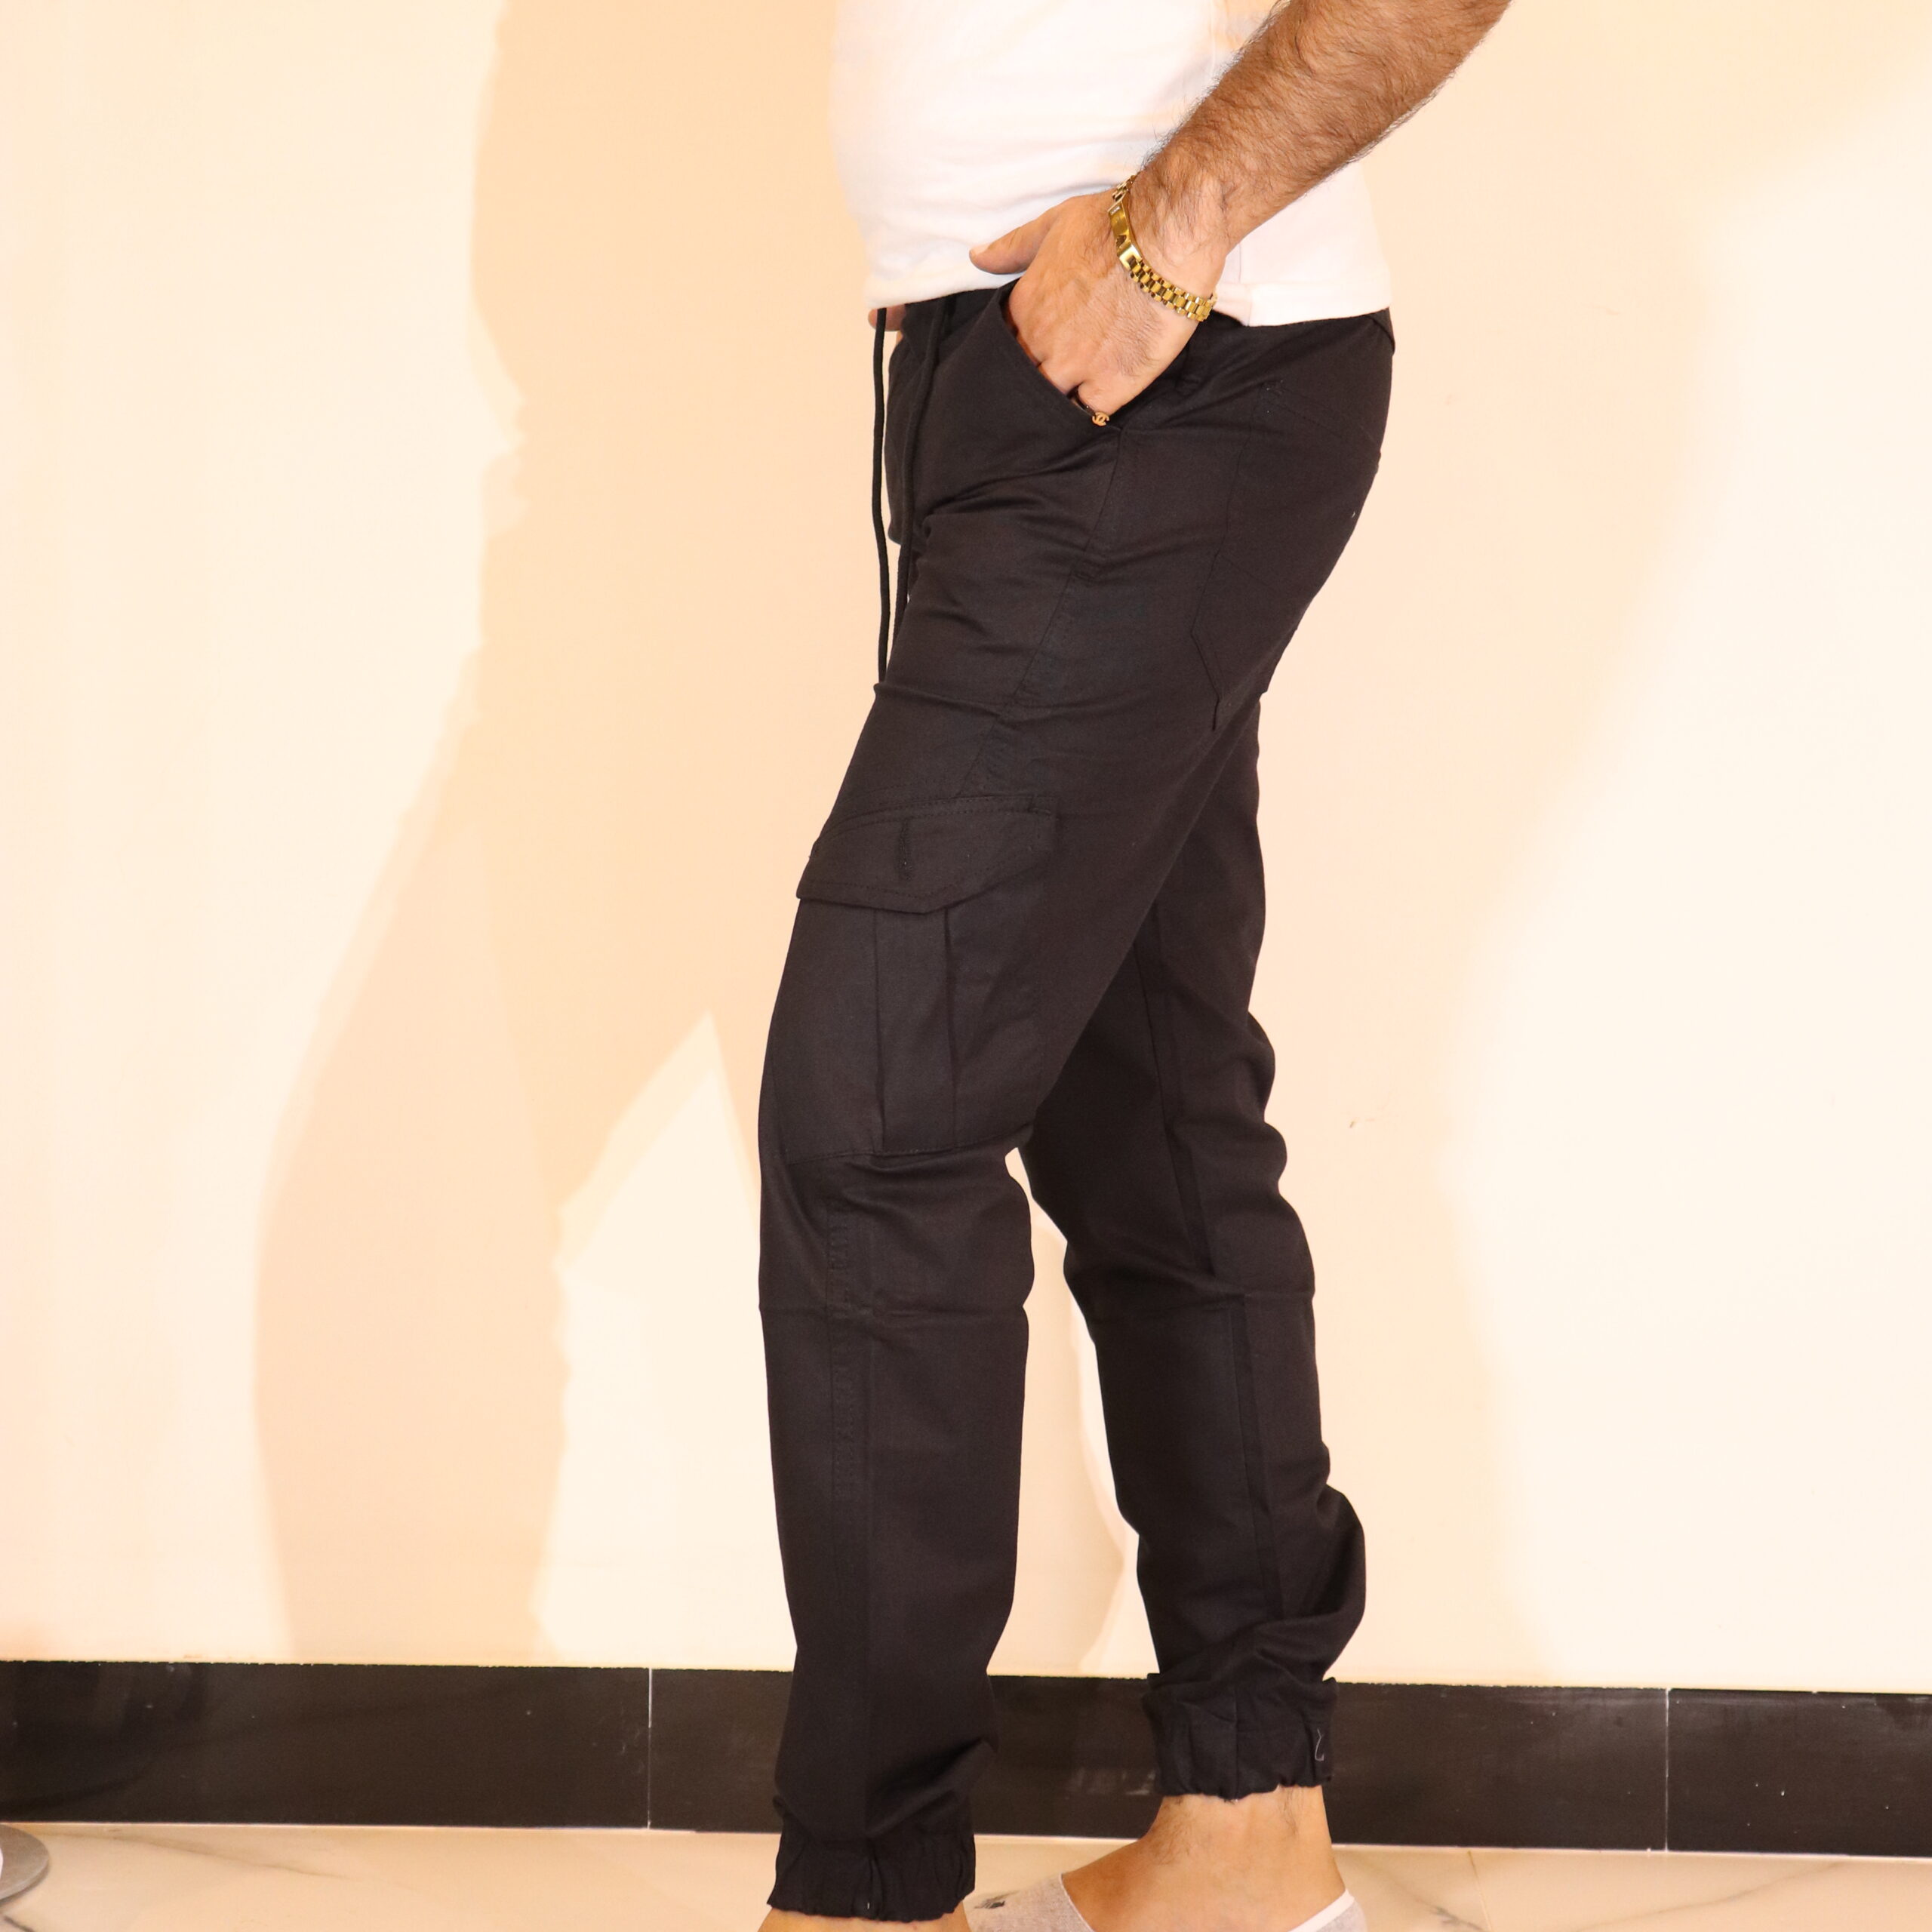 Generic Black Cargo Pants Men Hip Hop Streetwear Joggers Sweatpant Fashion  Harajuku Harem Pant MultiPocket Casual Mens Pants  Best Price Online   Jumia Egypt